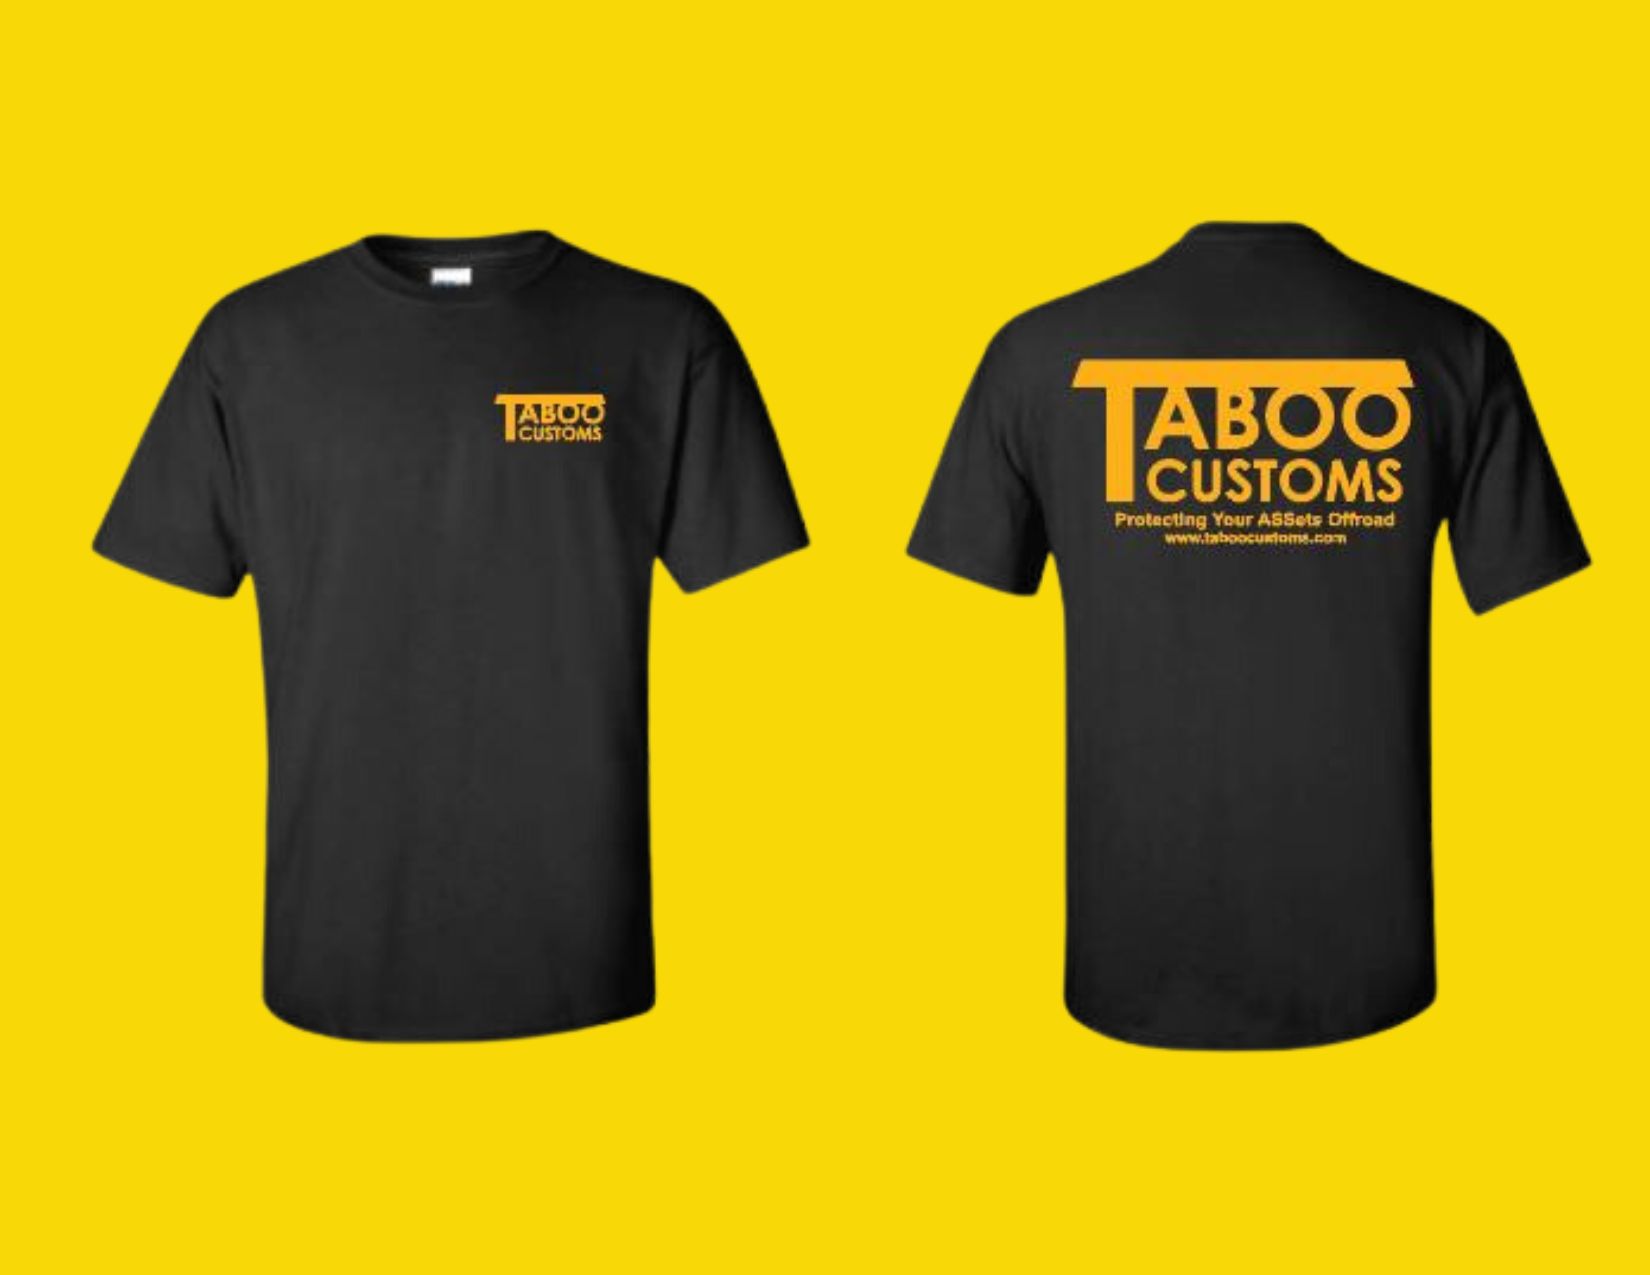 Taboo Customs X-Large T-Shirt